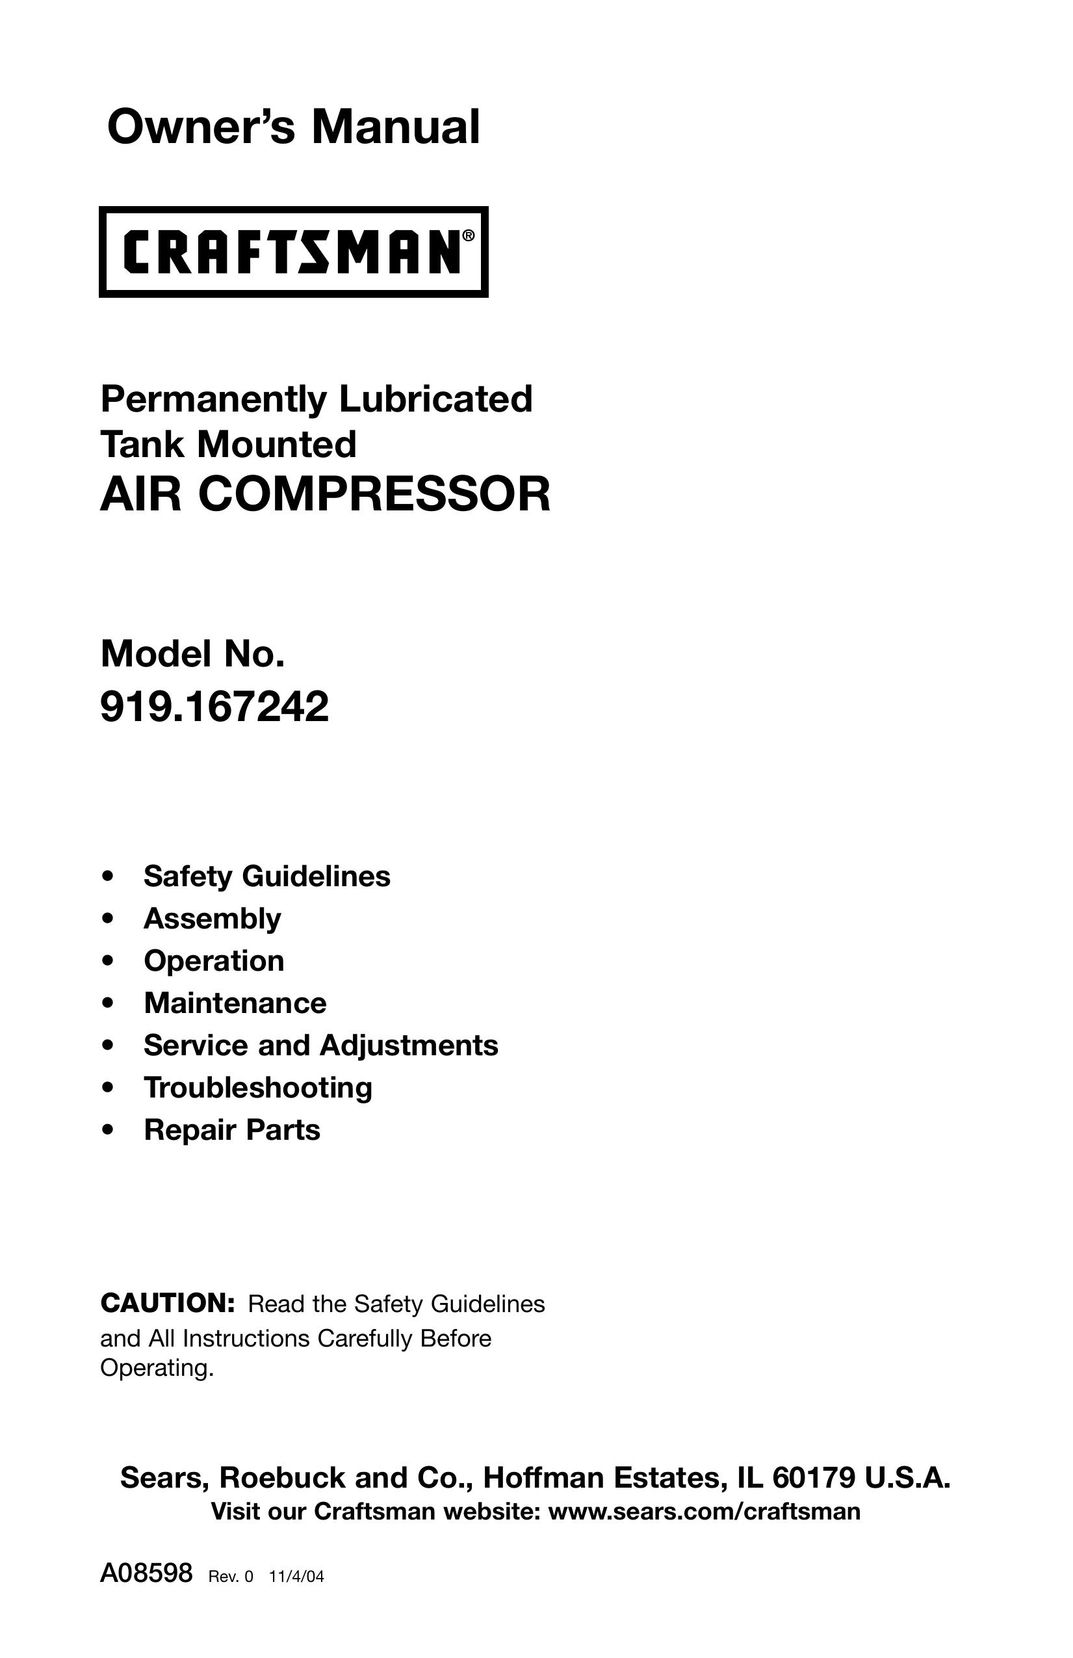 Craftsman 919.167242 Air Compressor User Manual